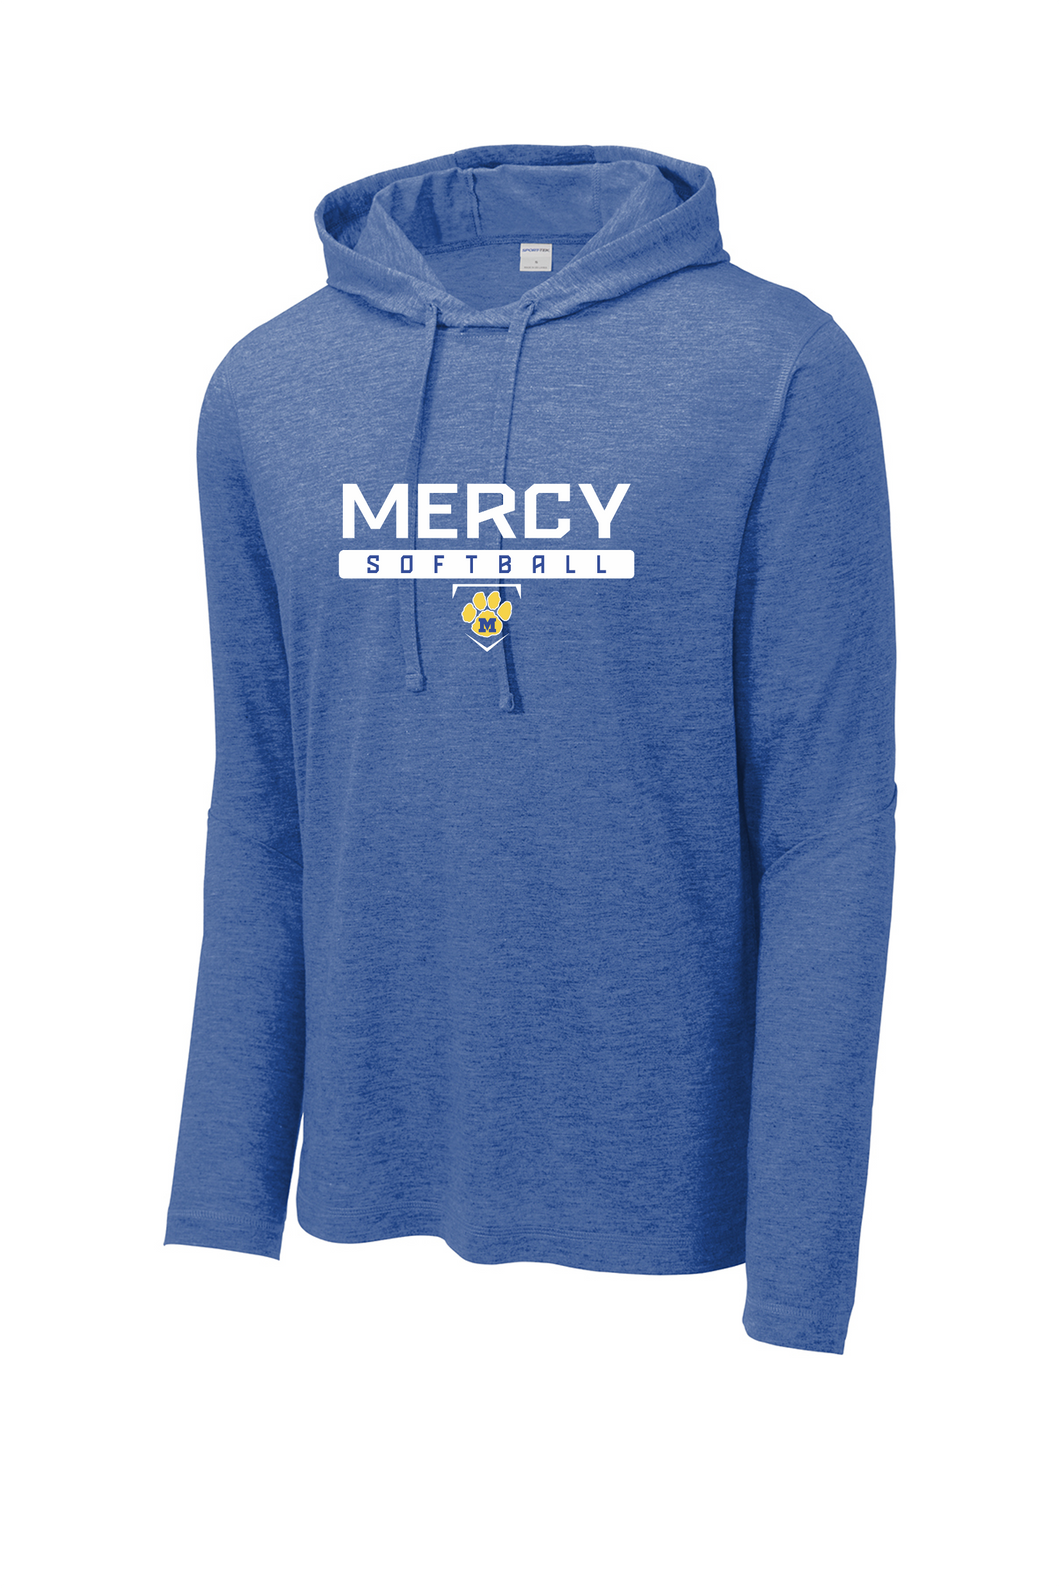 Tri-Blend Wicking Long Sleeve Hoodie - Mercy Softball